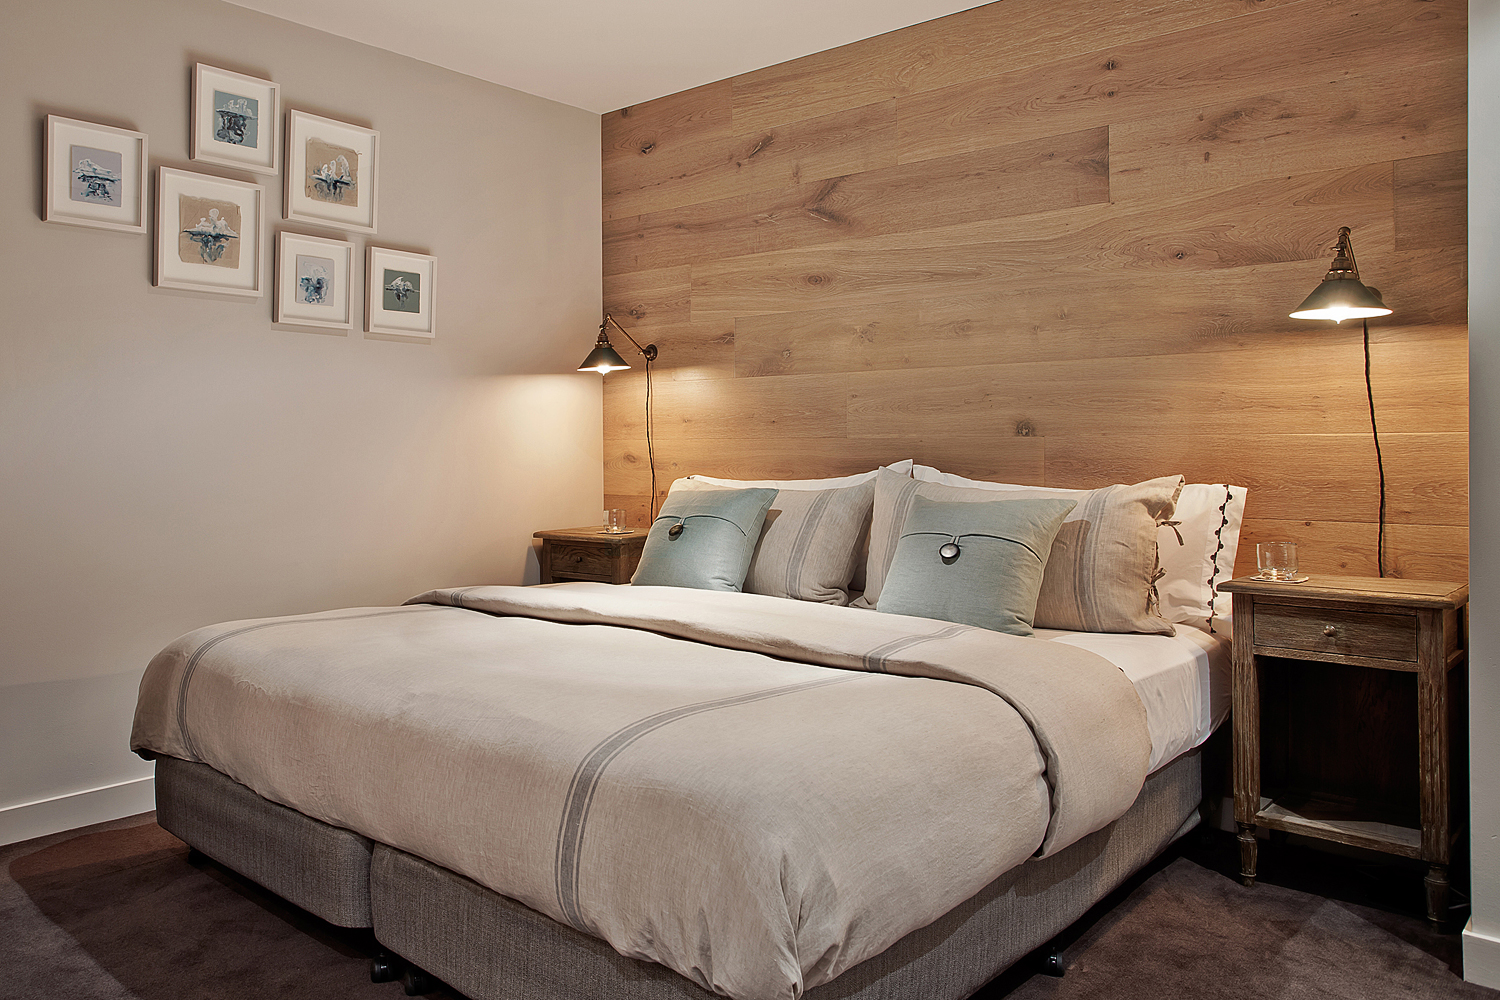 Wall bedside lights - ideal light for your bedroom comfort | Warisan